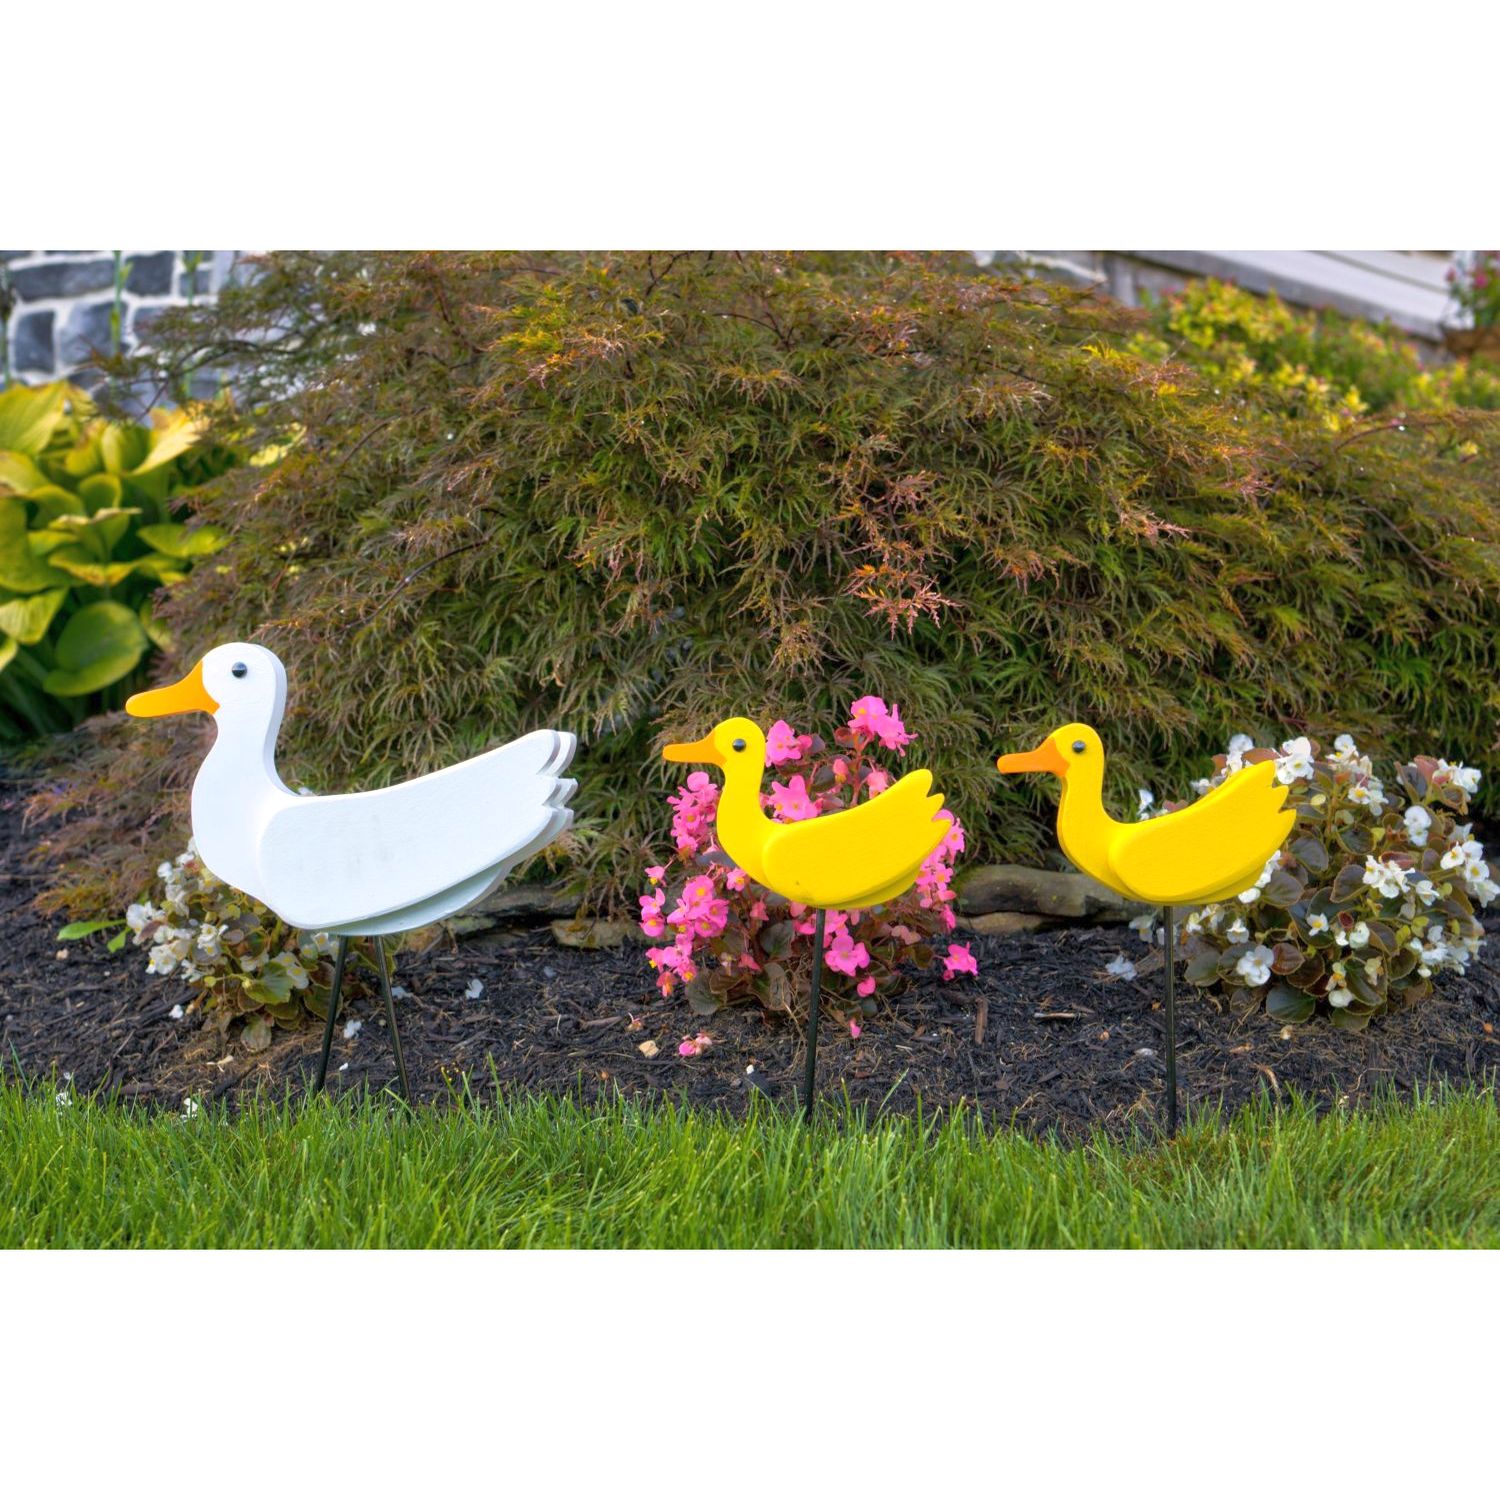 Yard Birds Garden Sculpture Stake Duck with Babies